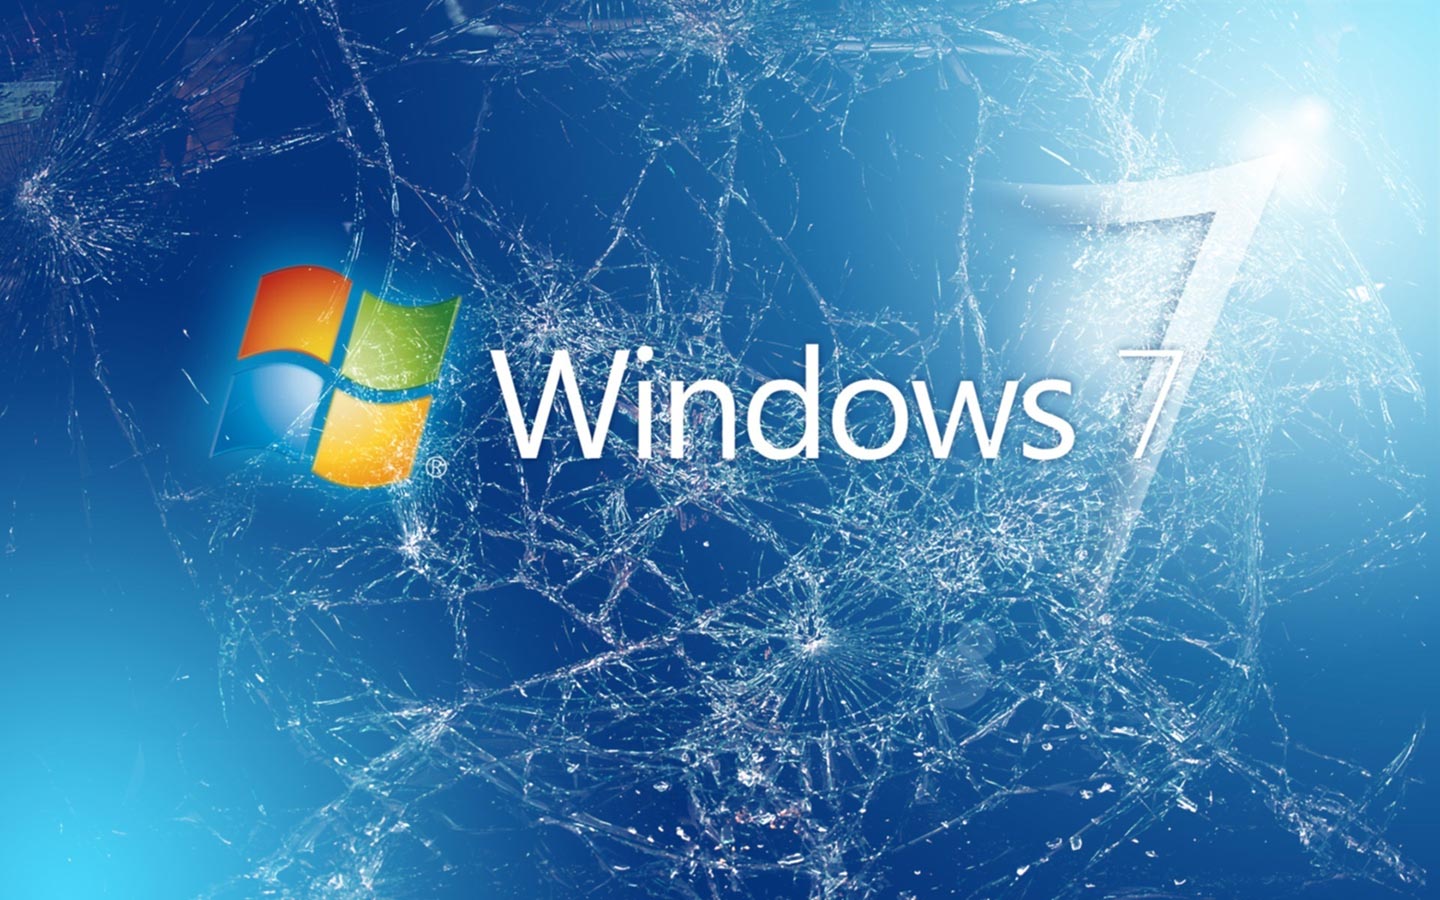 http://1.bp.blogspot.com/-G3k9KwNEKbg/USUDsfREk3I/AAAAAAAAF2c/ZJ96Bv2amlM/s1600/broken-screen-windows-hd-place-windows7-win7-tela+quebrada-the+bazinga.jpg